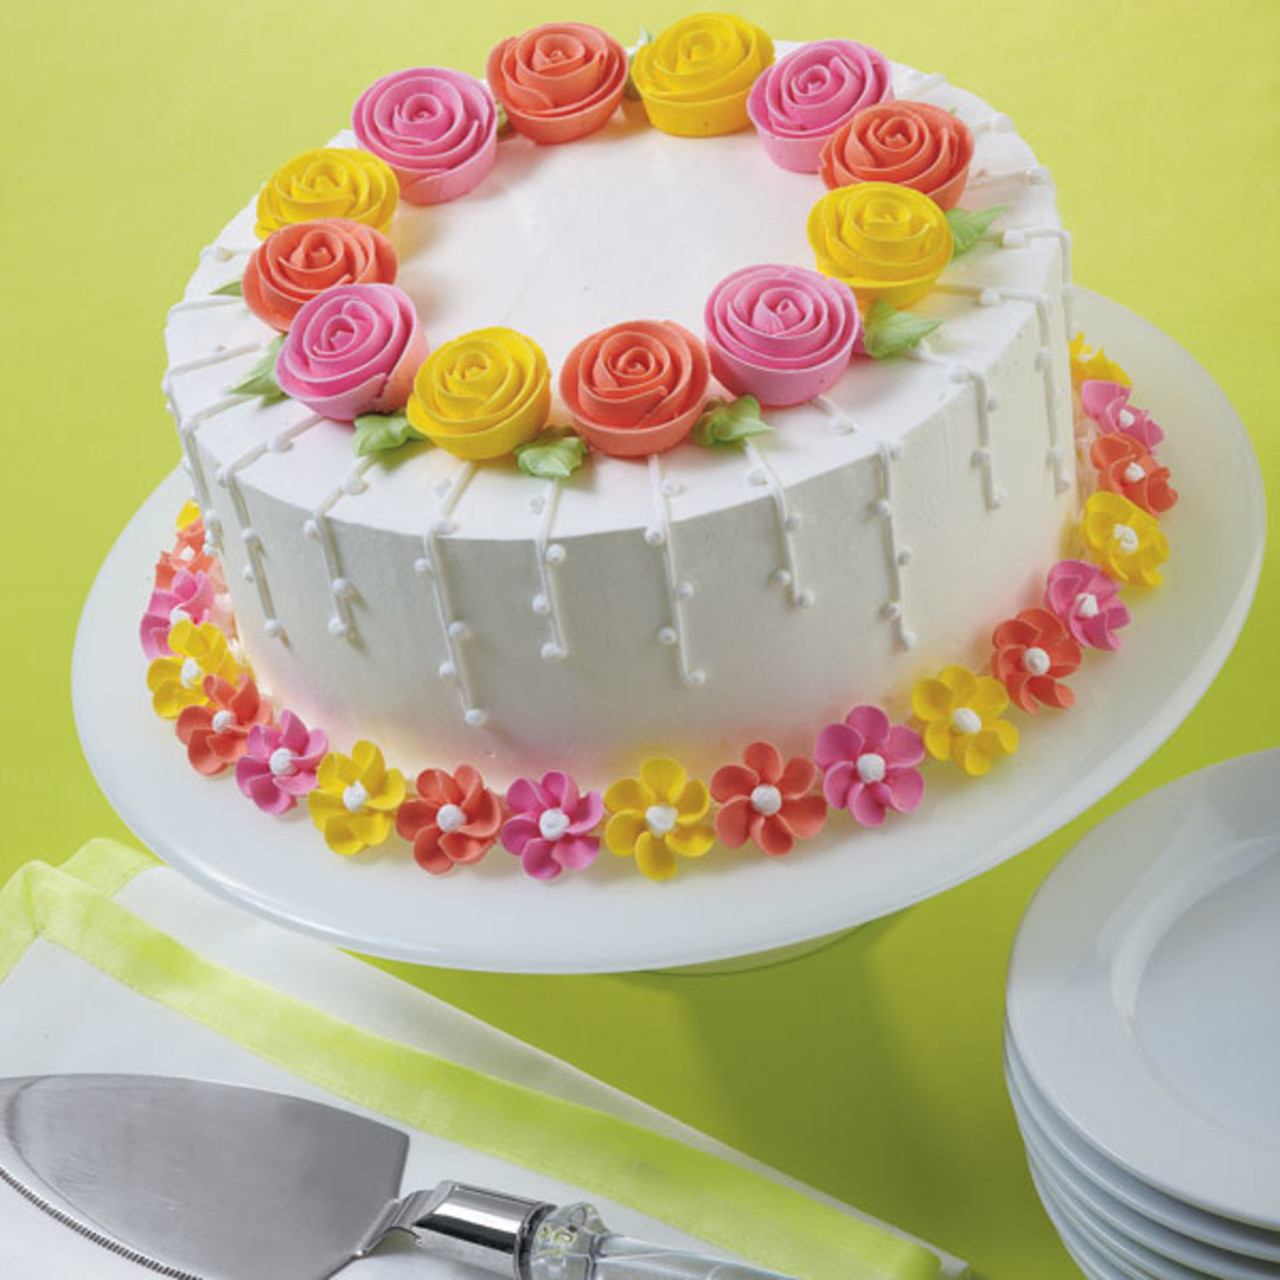 Rose Cake Designs & Images